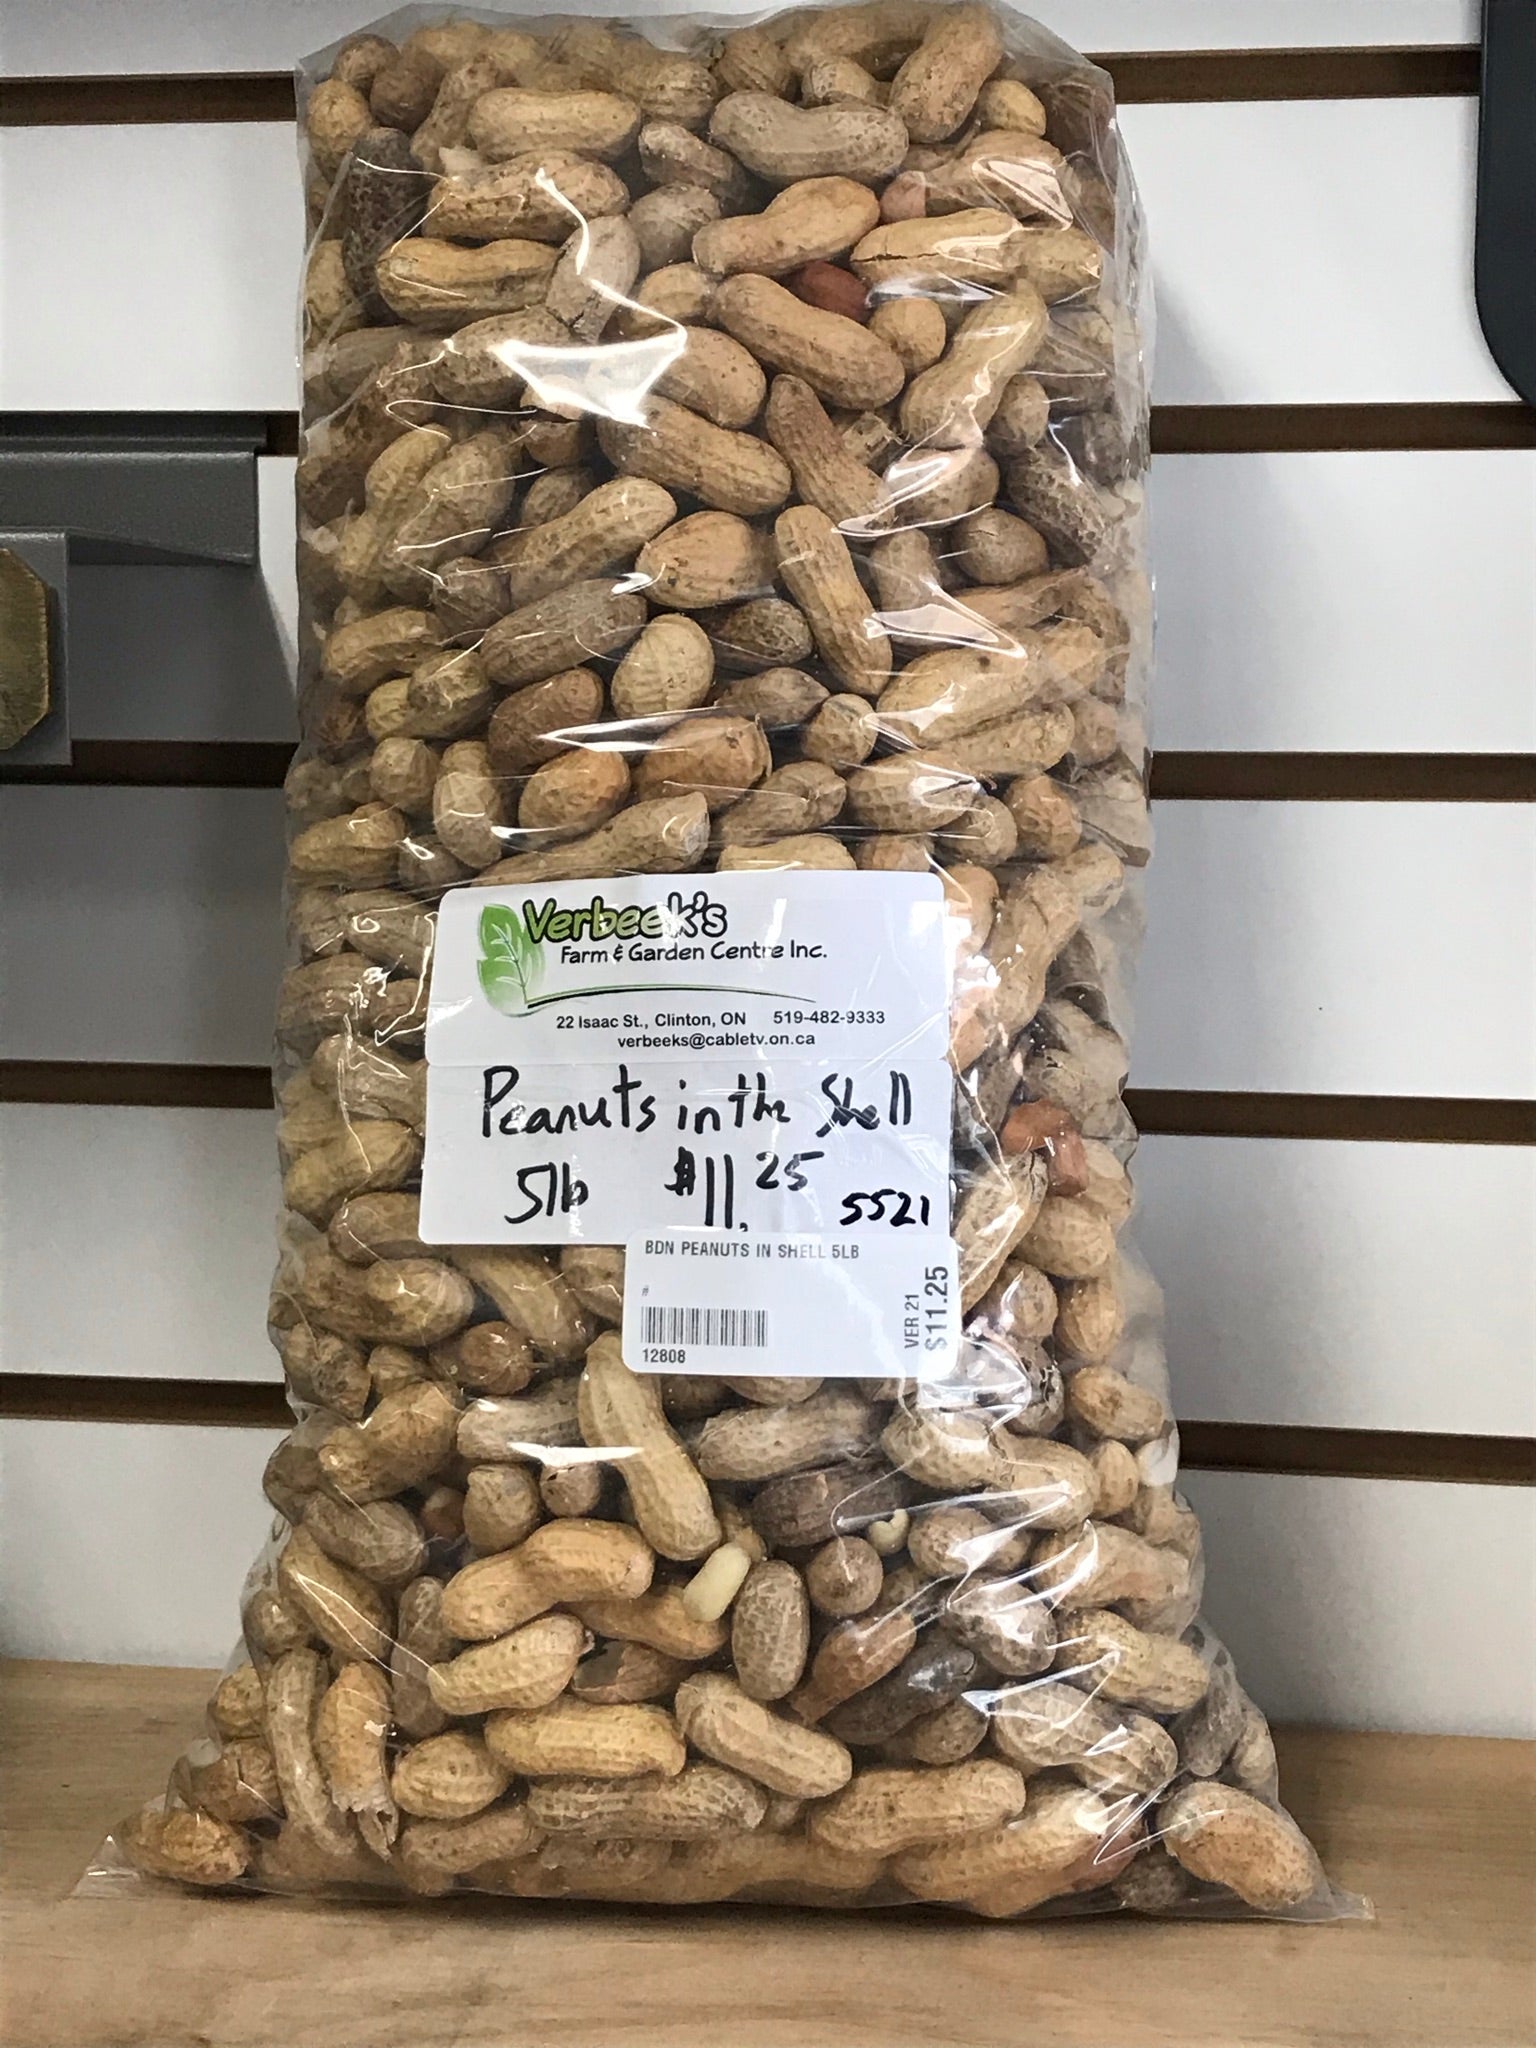 Peanuts in the Shell - 5lb - Bulk